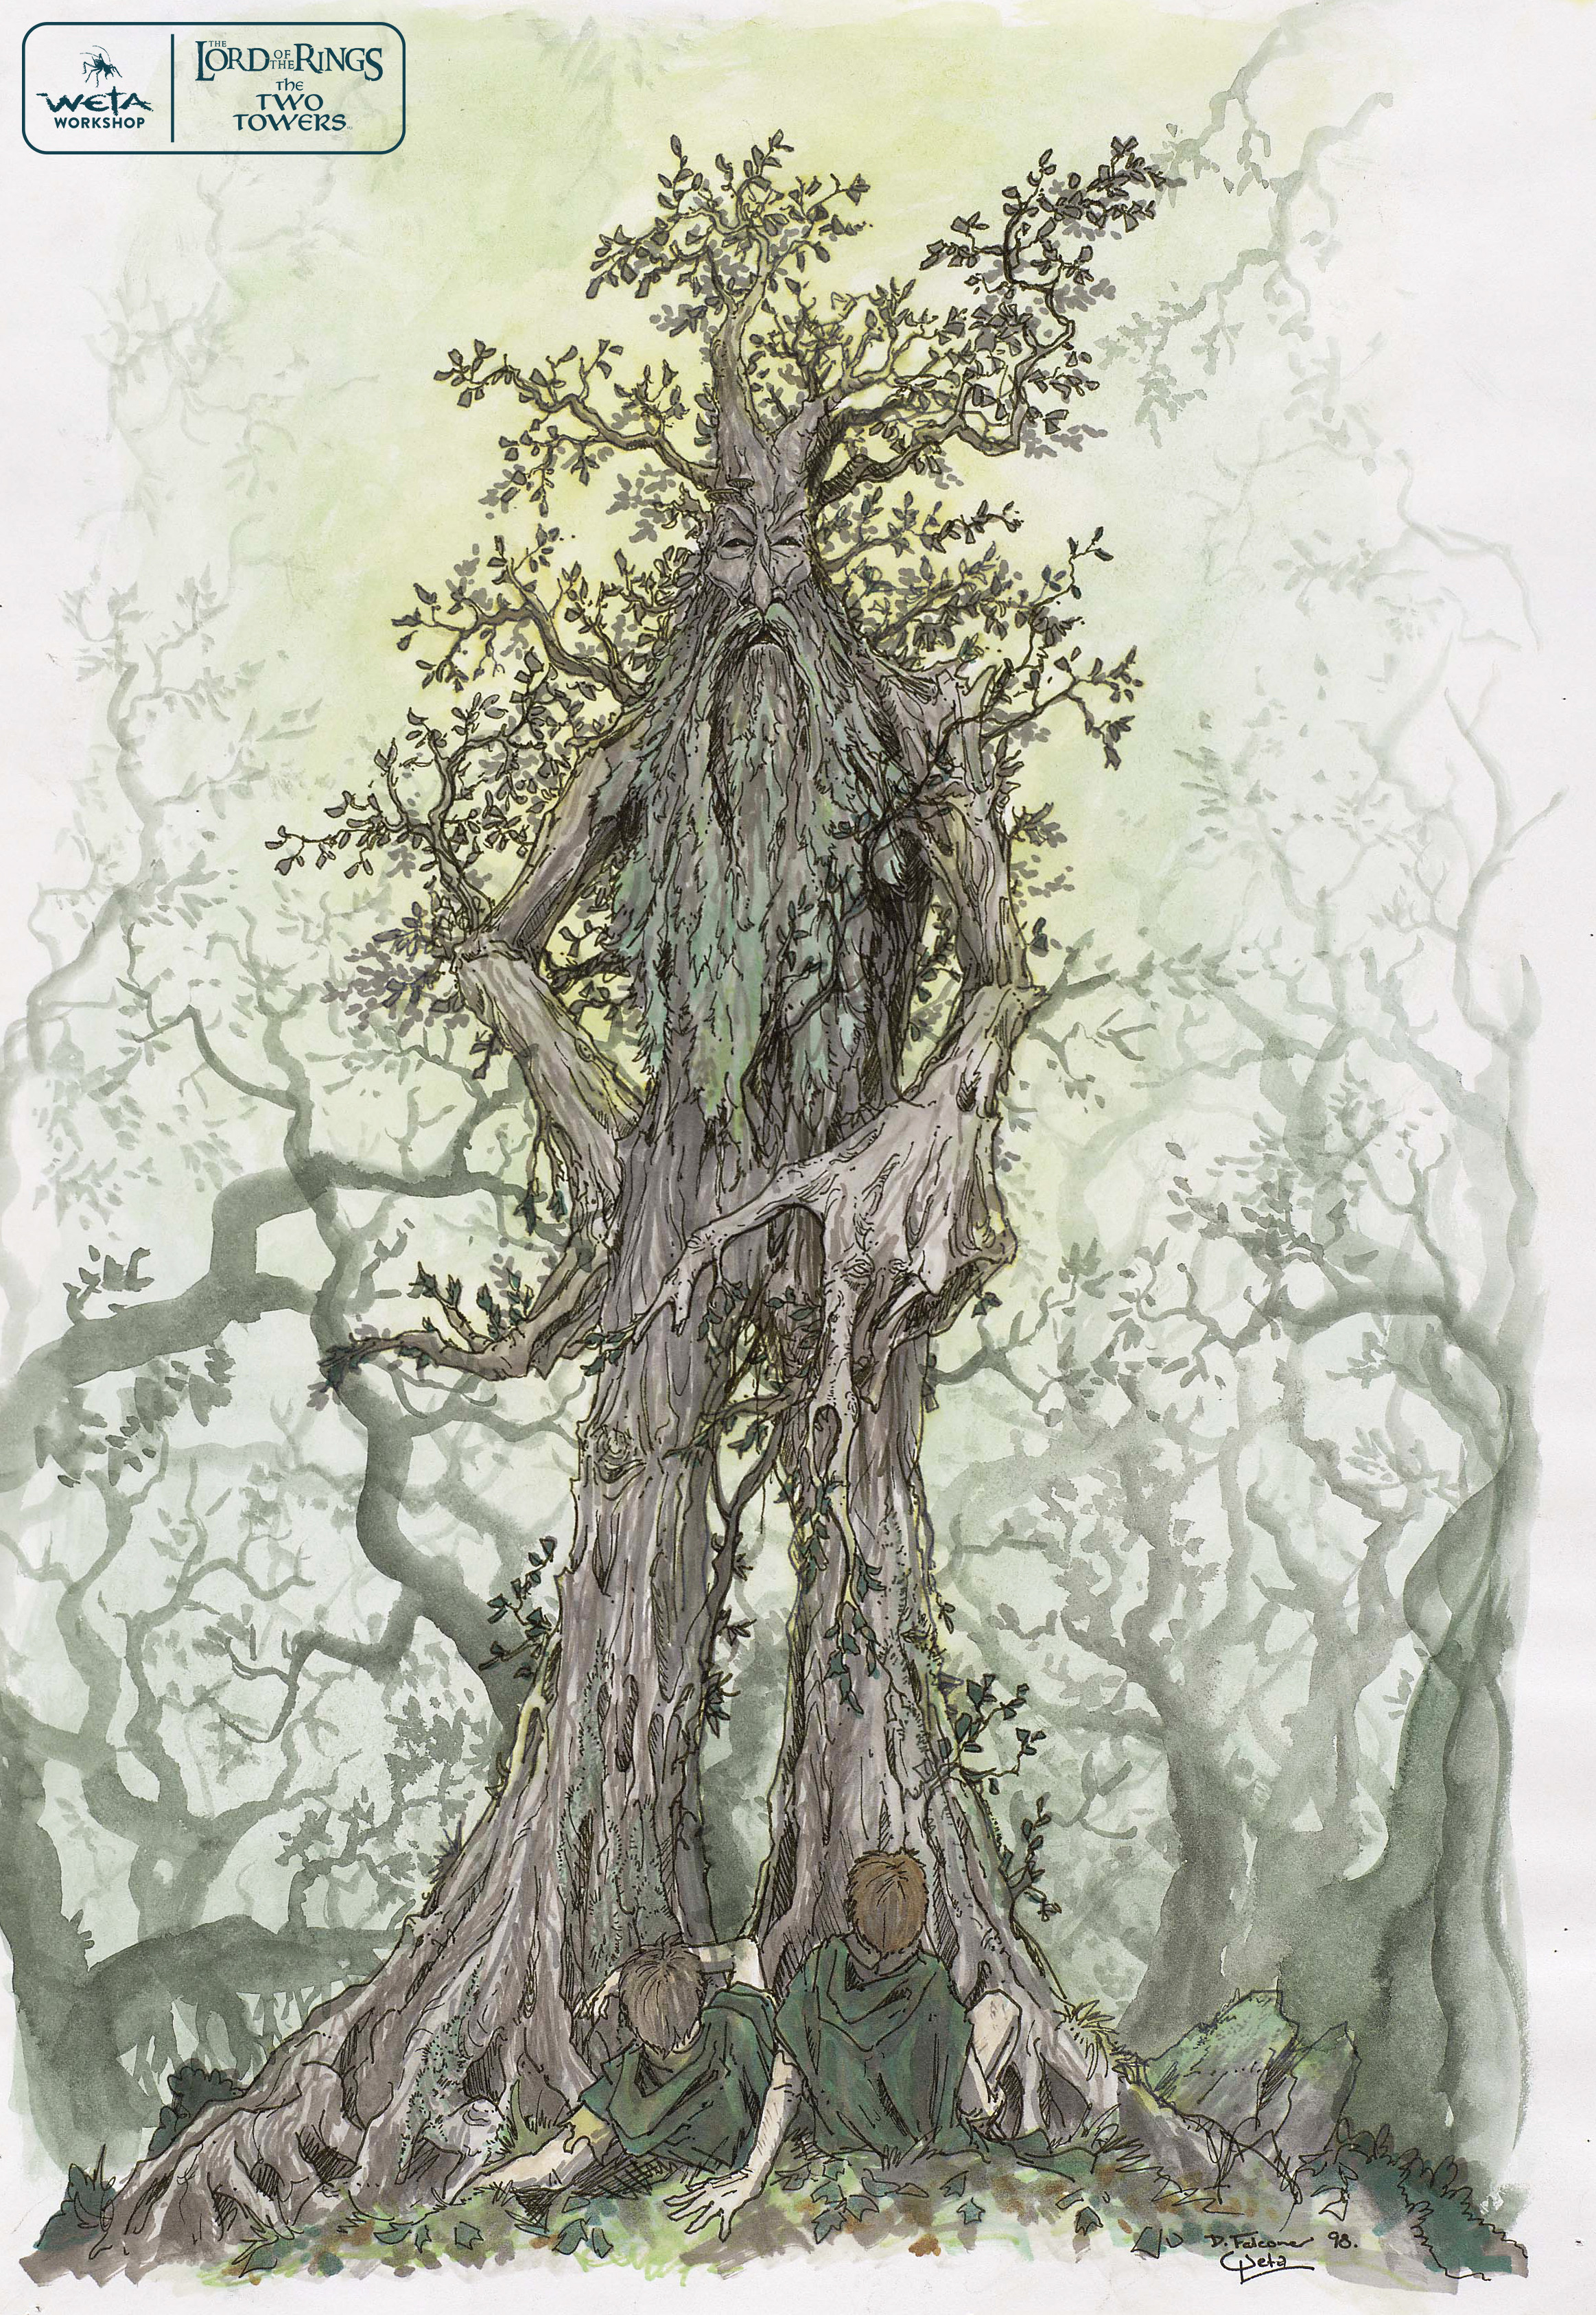 Treebeard - Artist: Daniel Falconer